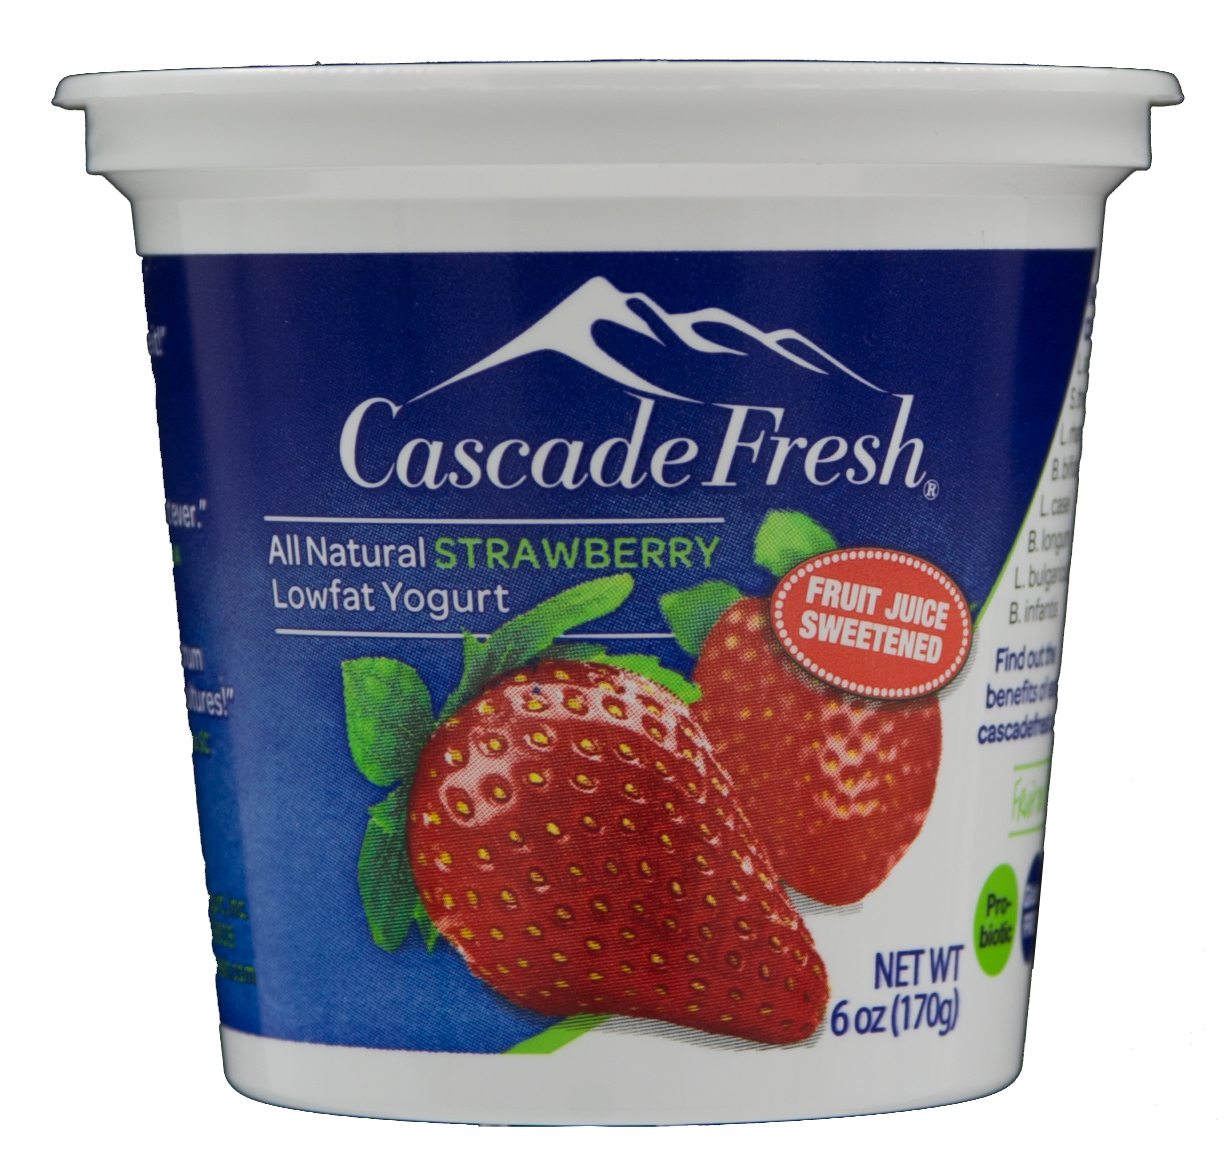 Kris Fuehr purchased Cascade Fresh yogurt with her husband Curt.